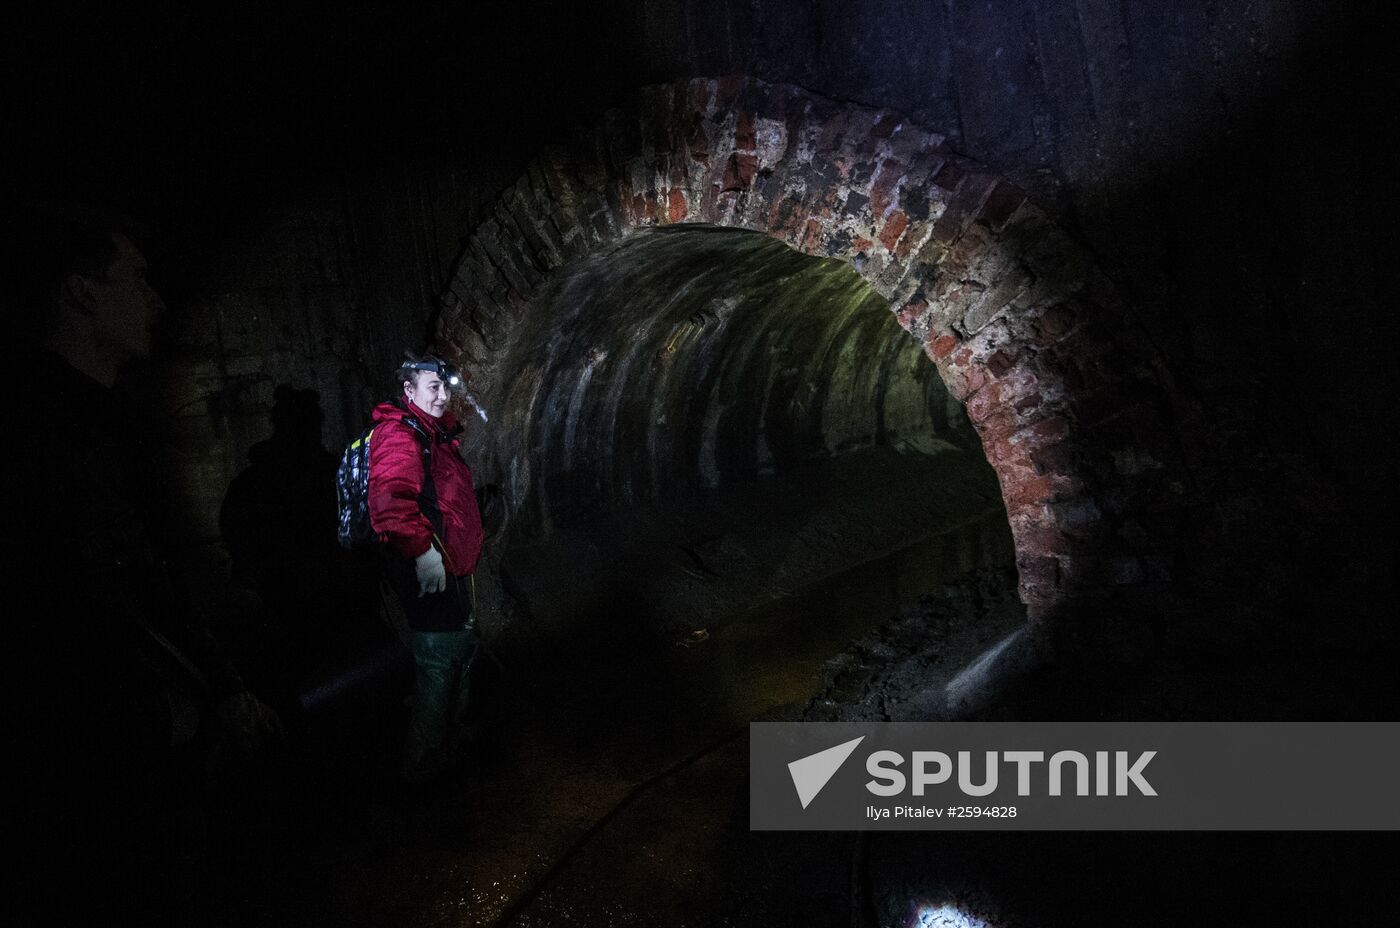 Neglinnaya river tunnel in Moscow